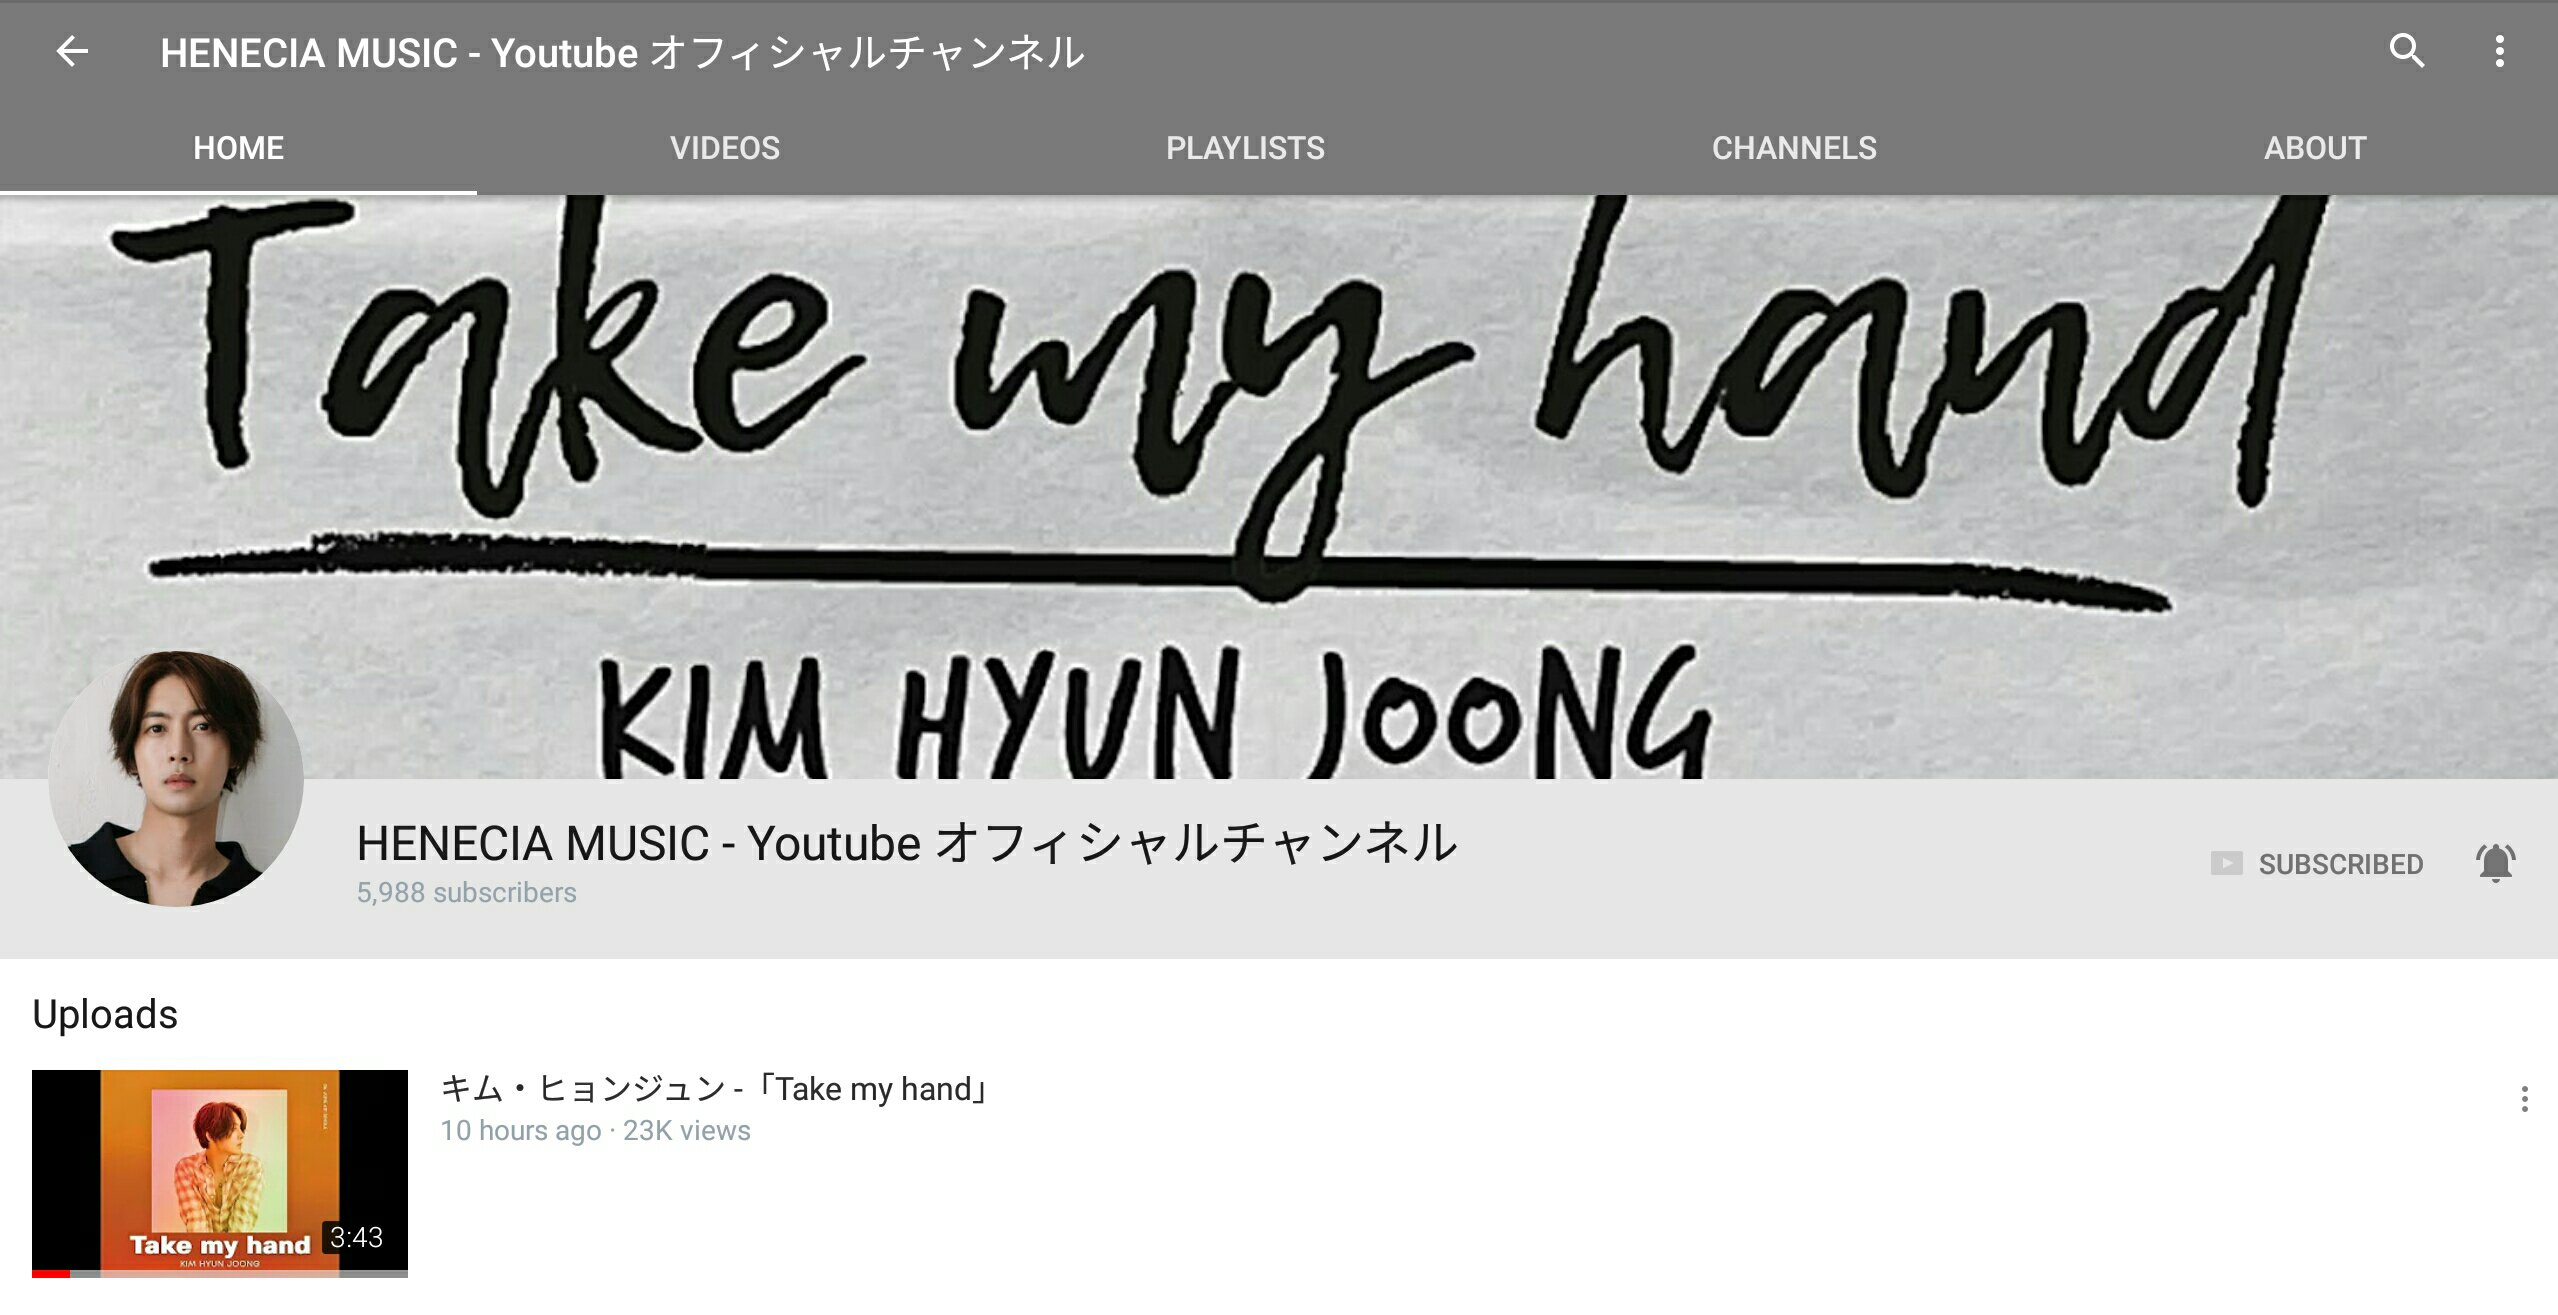 HENECIA MUSIC YouTube channel: Take my Hand - Kim Hyun Joong